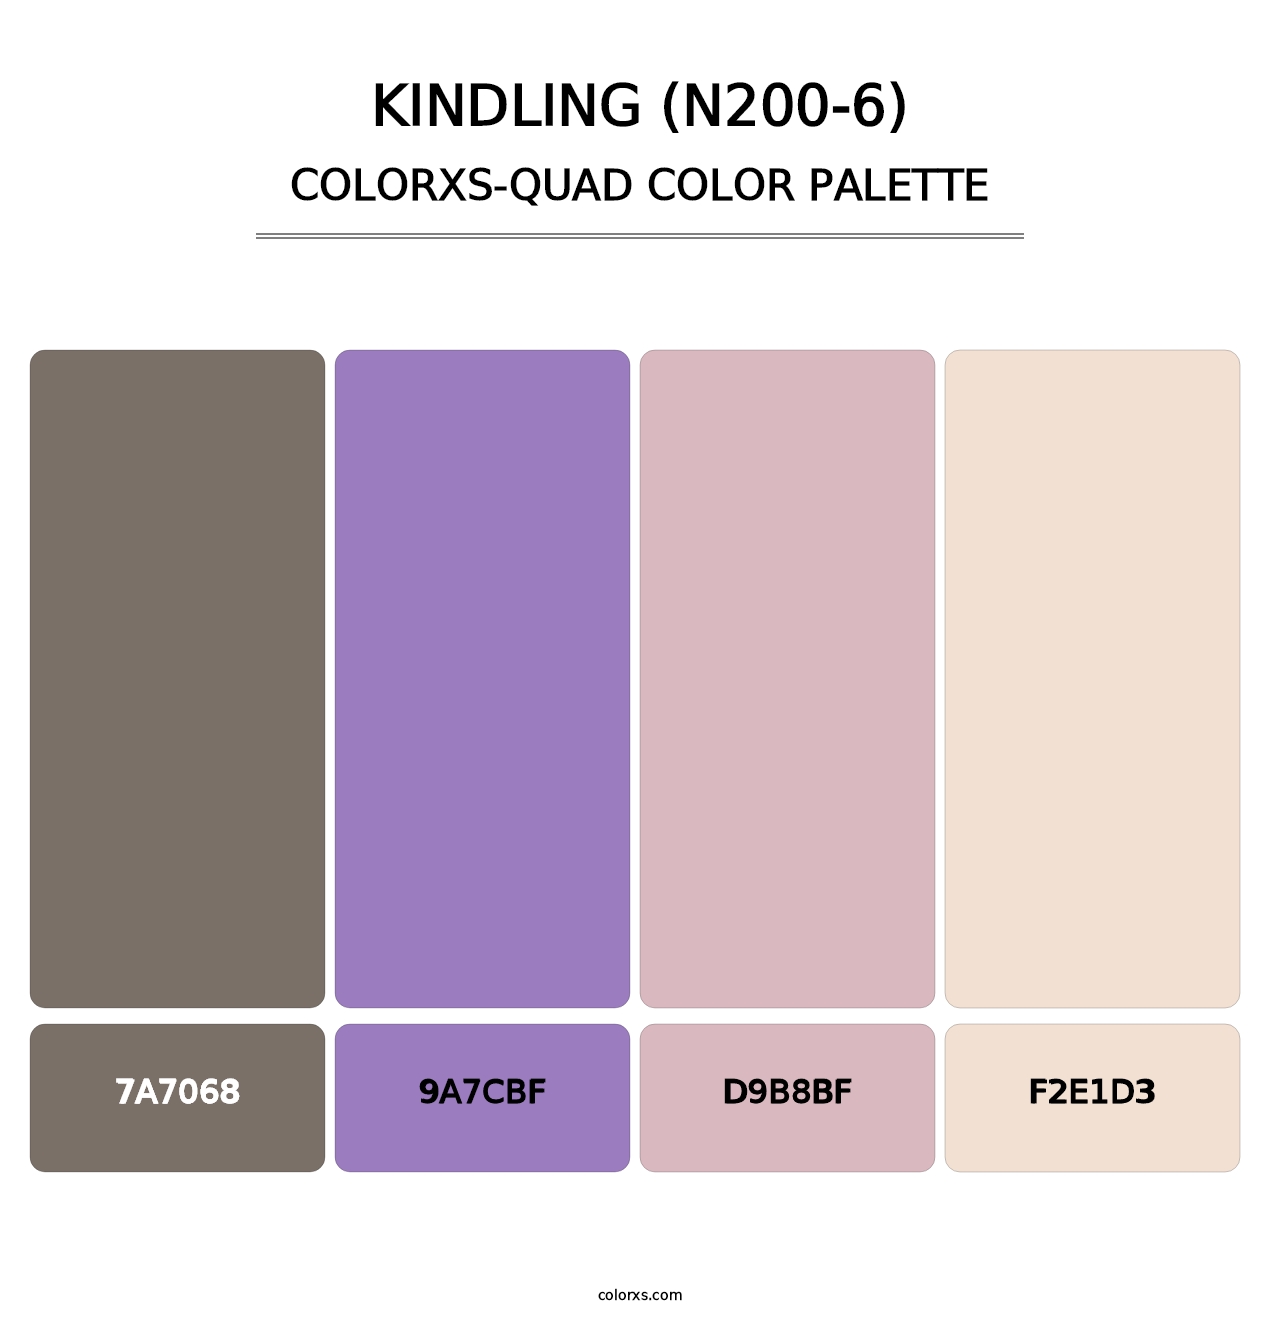 Kindling (N200-6) - Colorxs Quad Palette